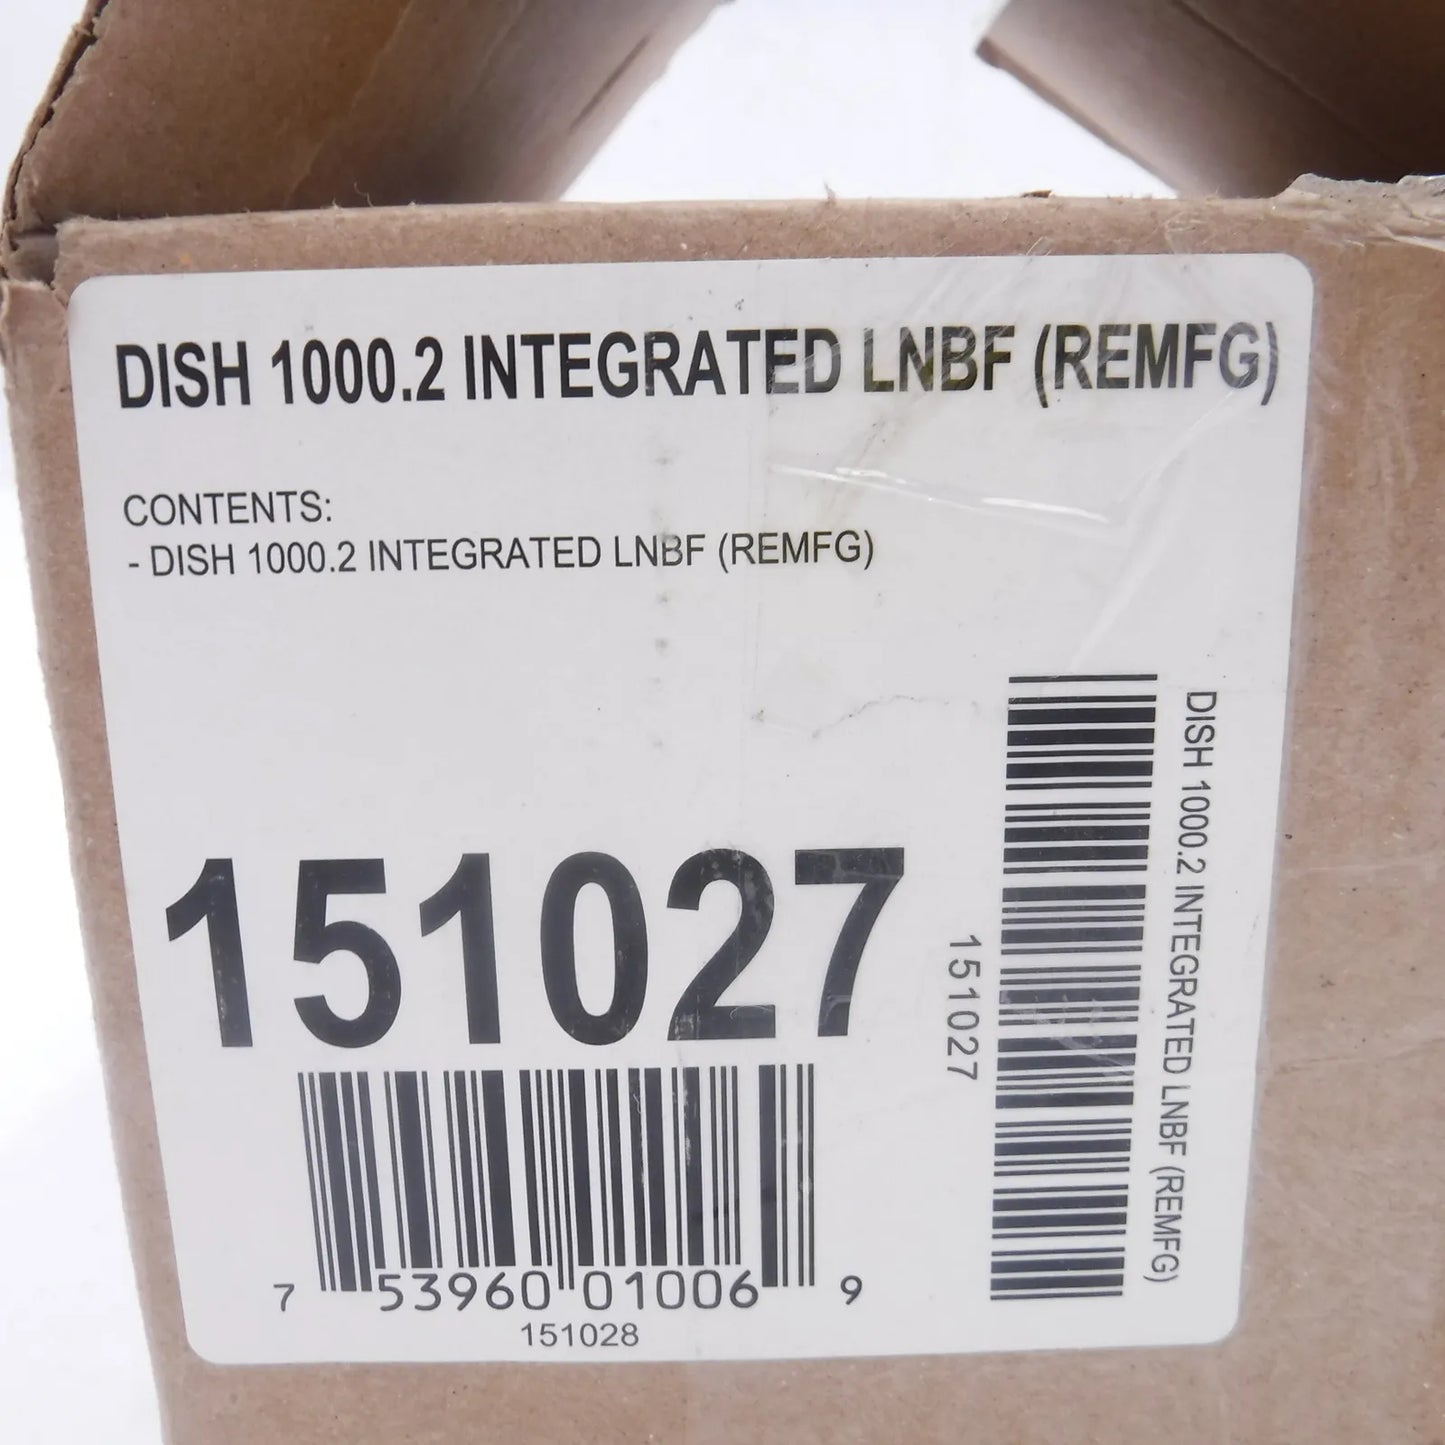 Manufacture Refurbished DN 1000.2 DISH PRO PLUS INTEGRATED LNBF